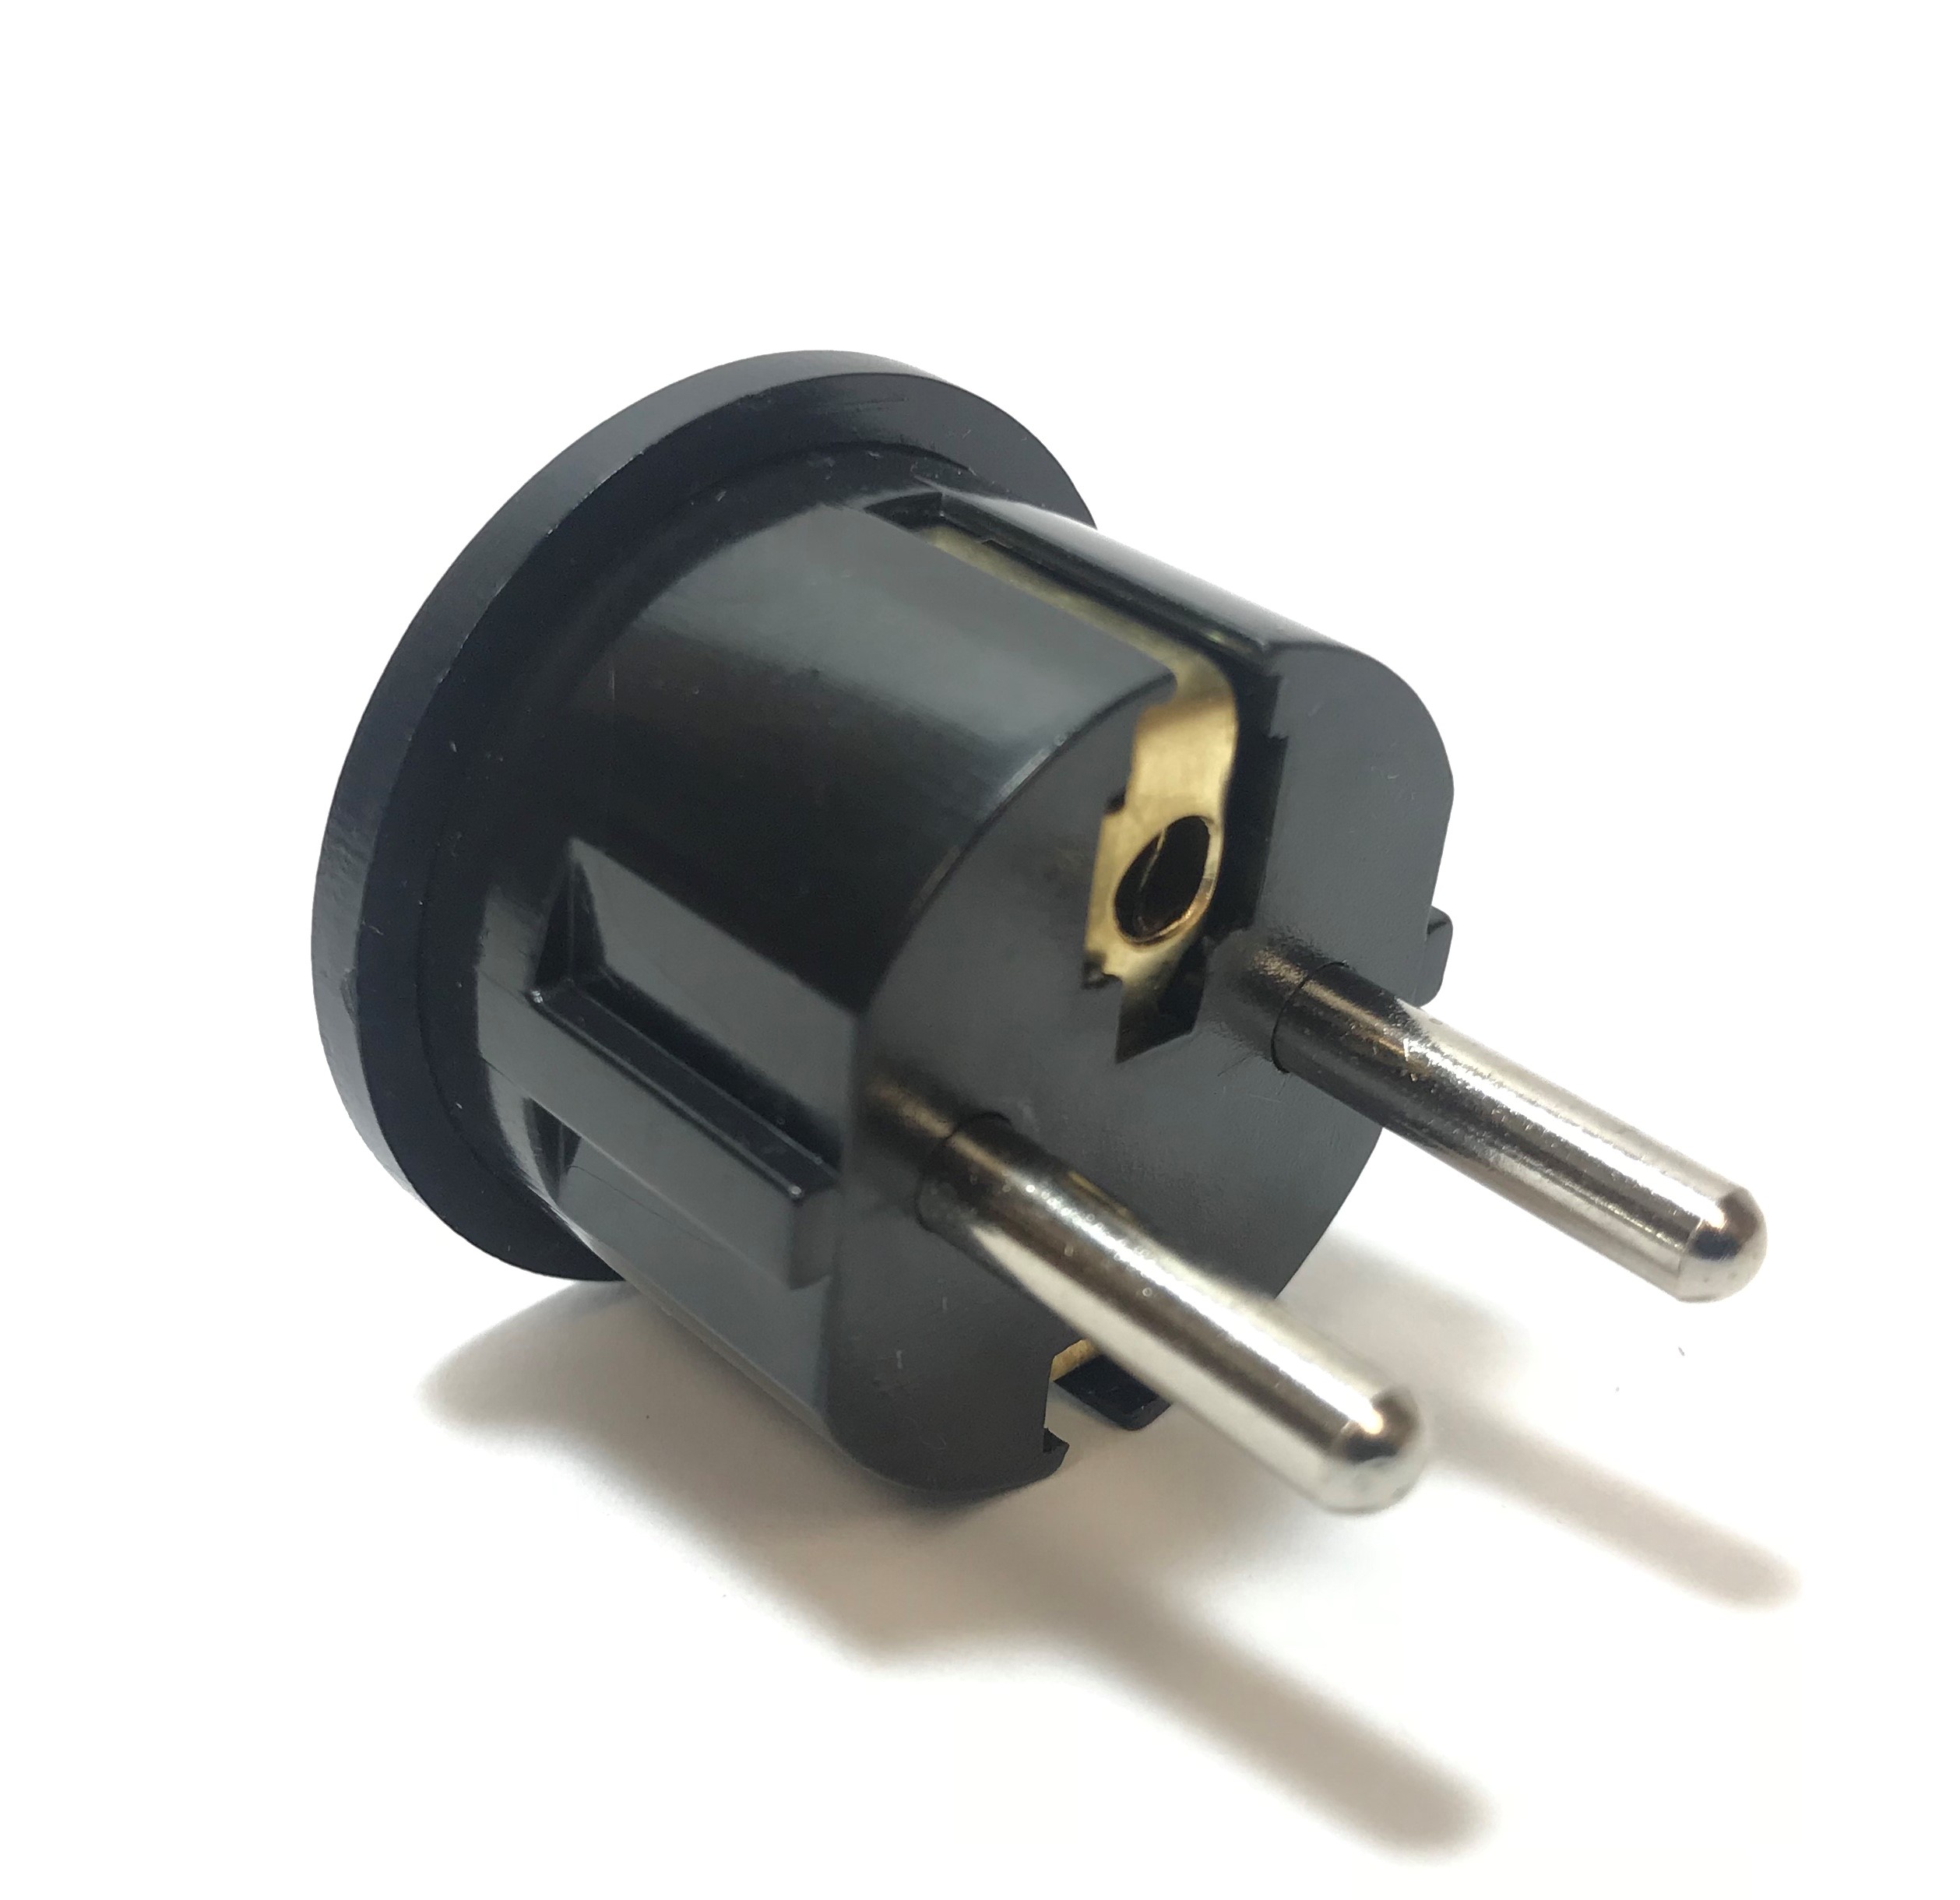 Type E / F European Plug Adapter From American USA to Europe European Style Ground